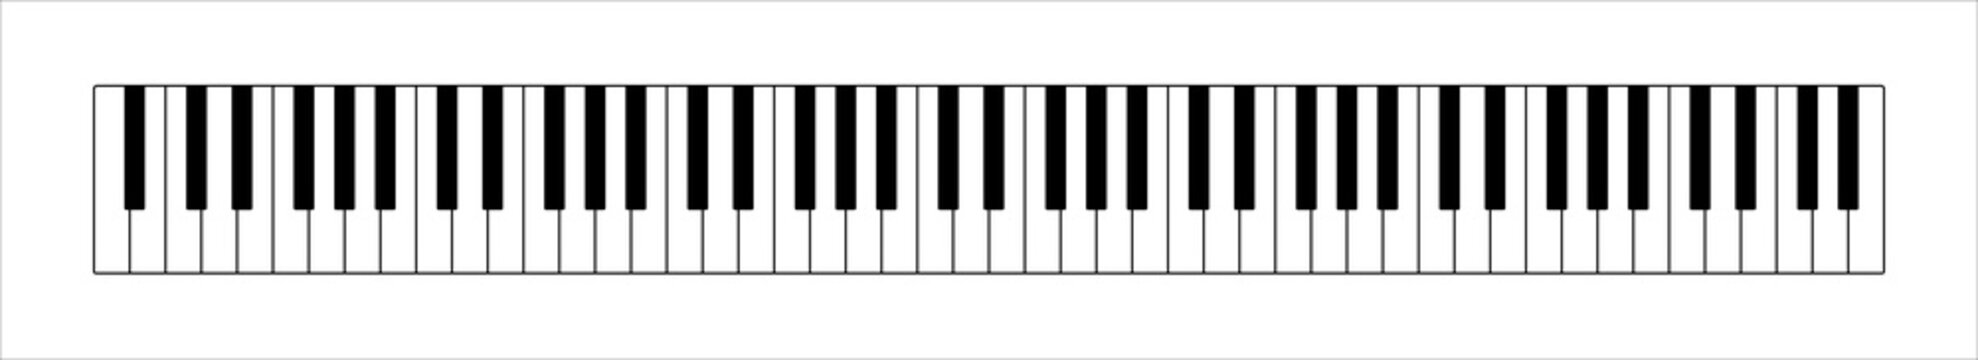 Piano keyboard. Piano vector diagram. Musical instrument illustration.